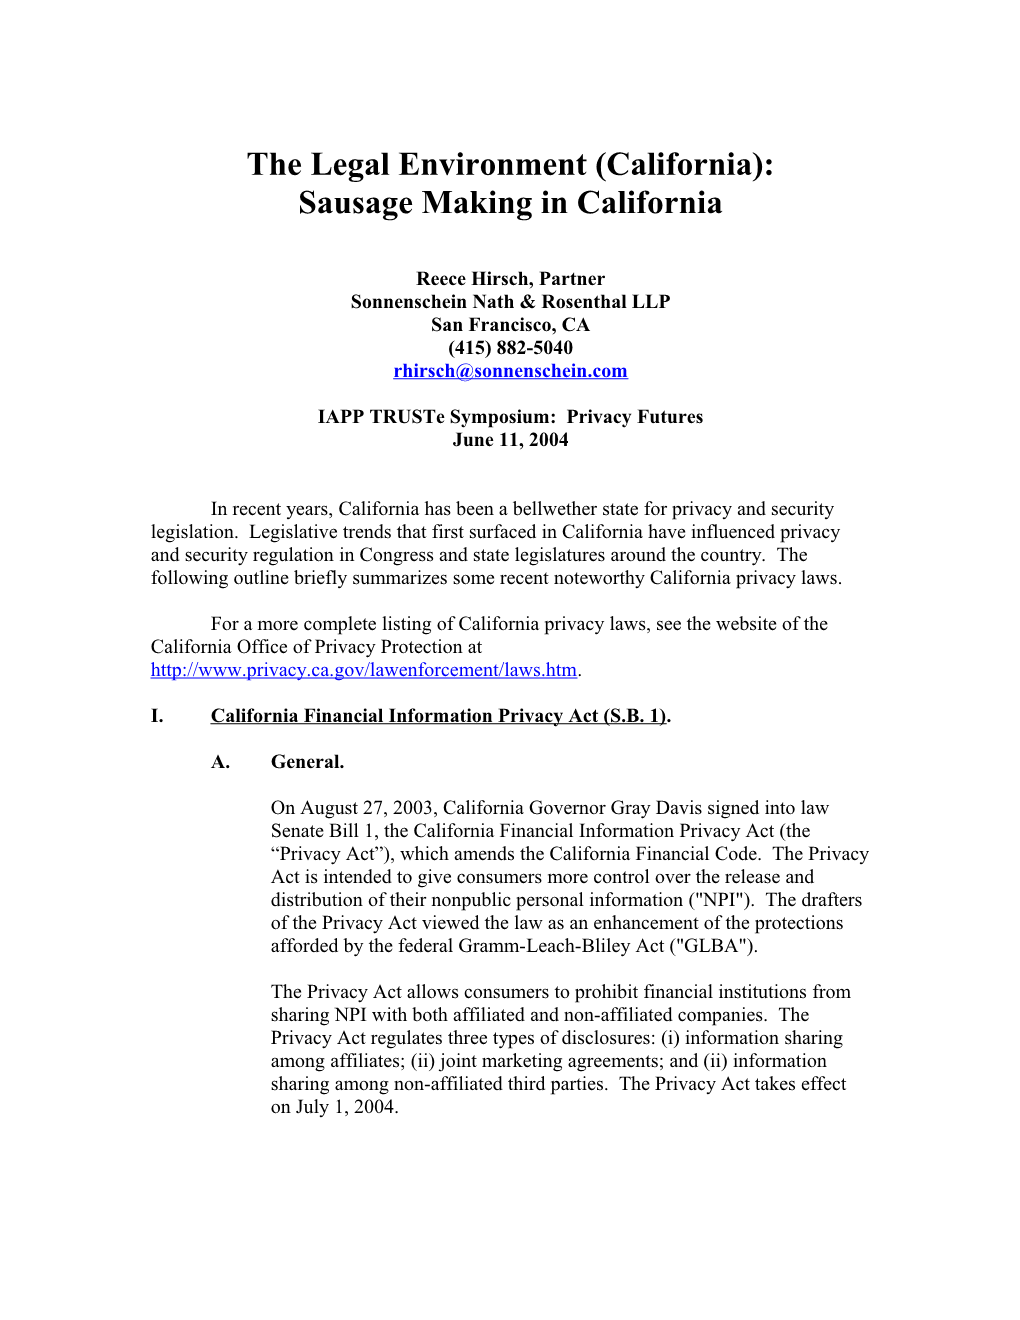 The Legal Environment (California)